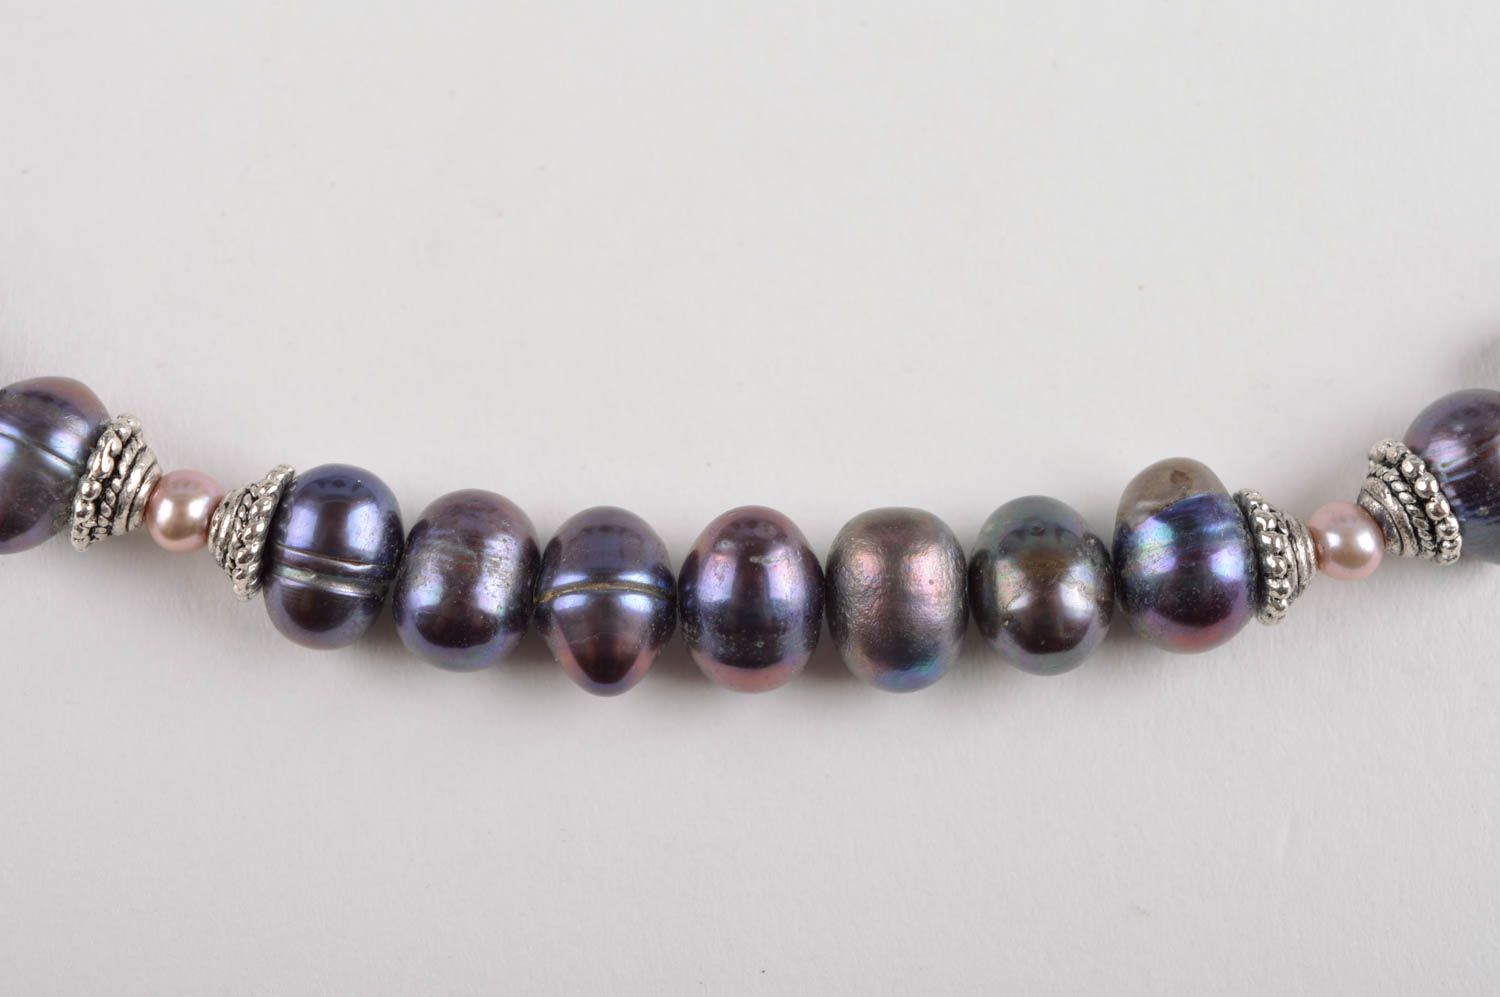 Handmade necklace pearl jewelry designer accessories gemstone jewelry gift ideas photo 3